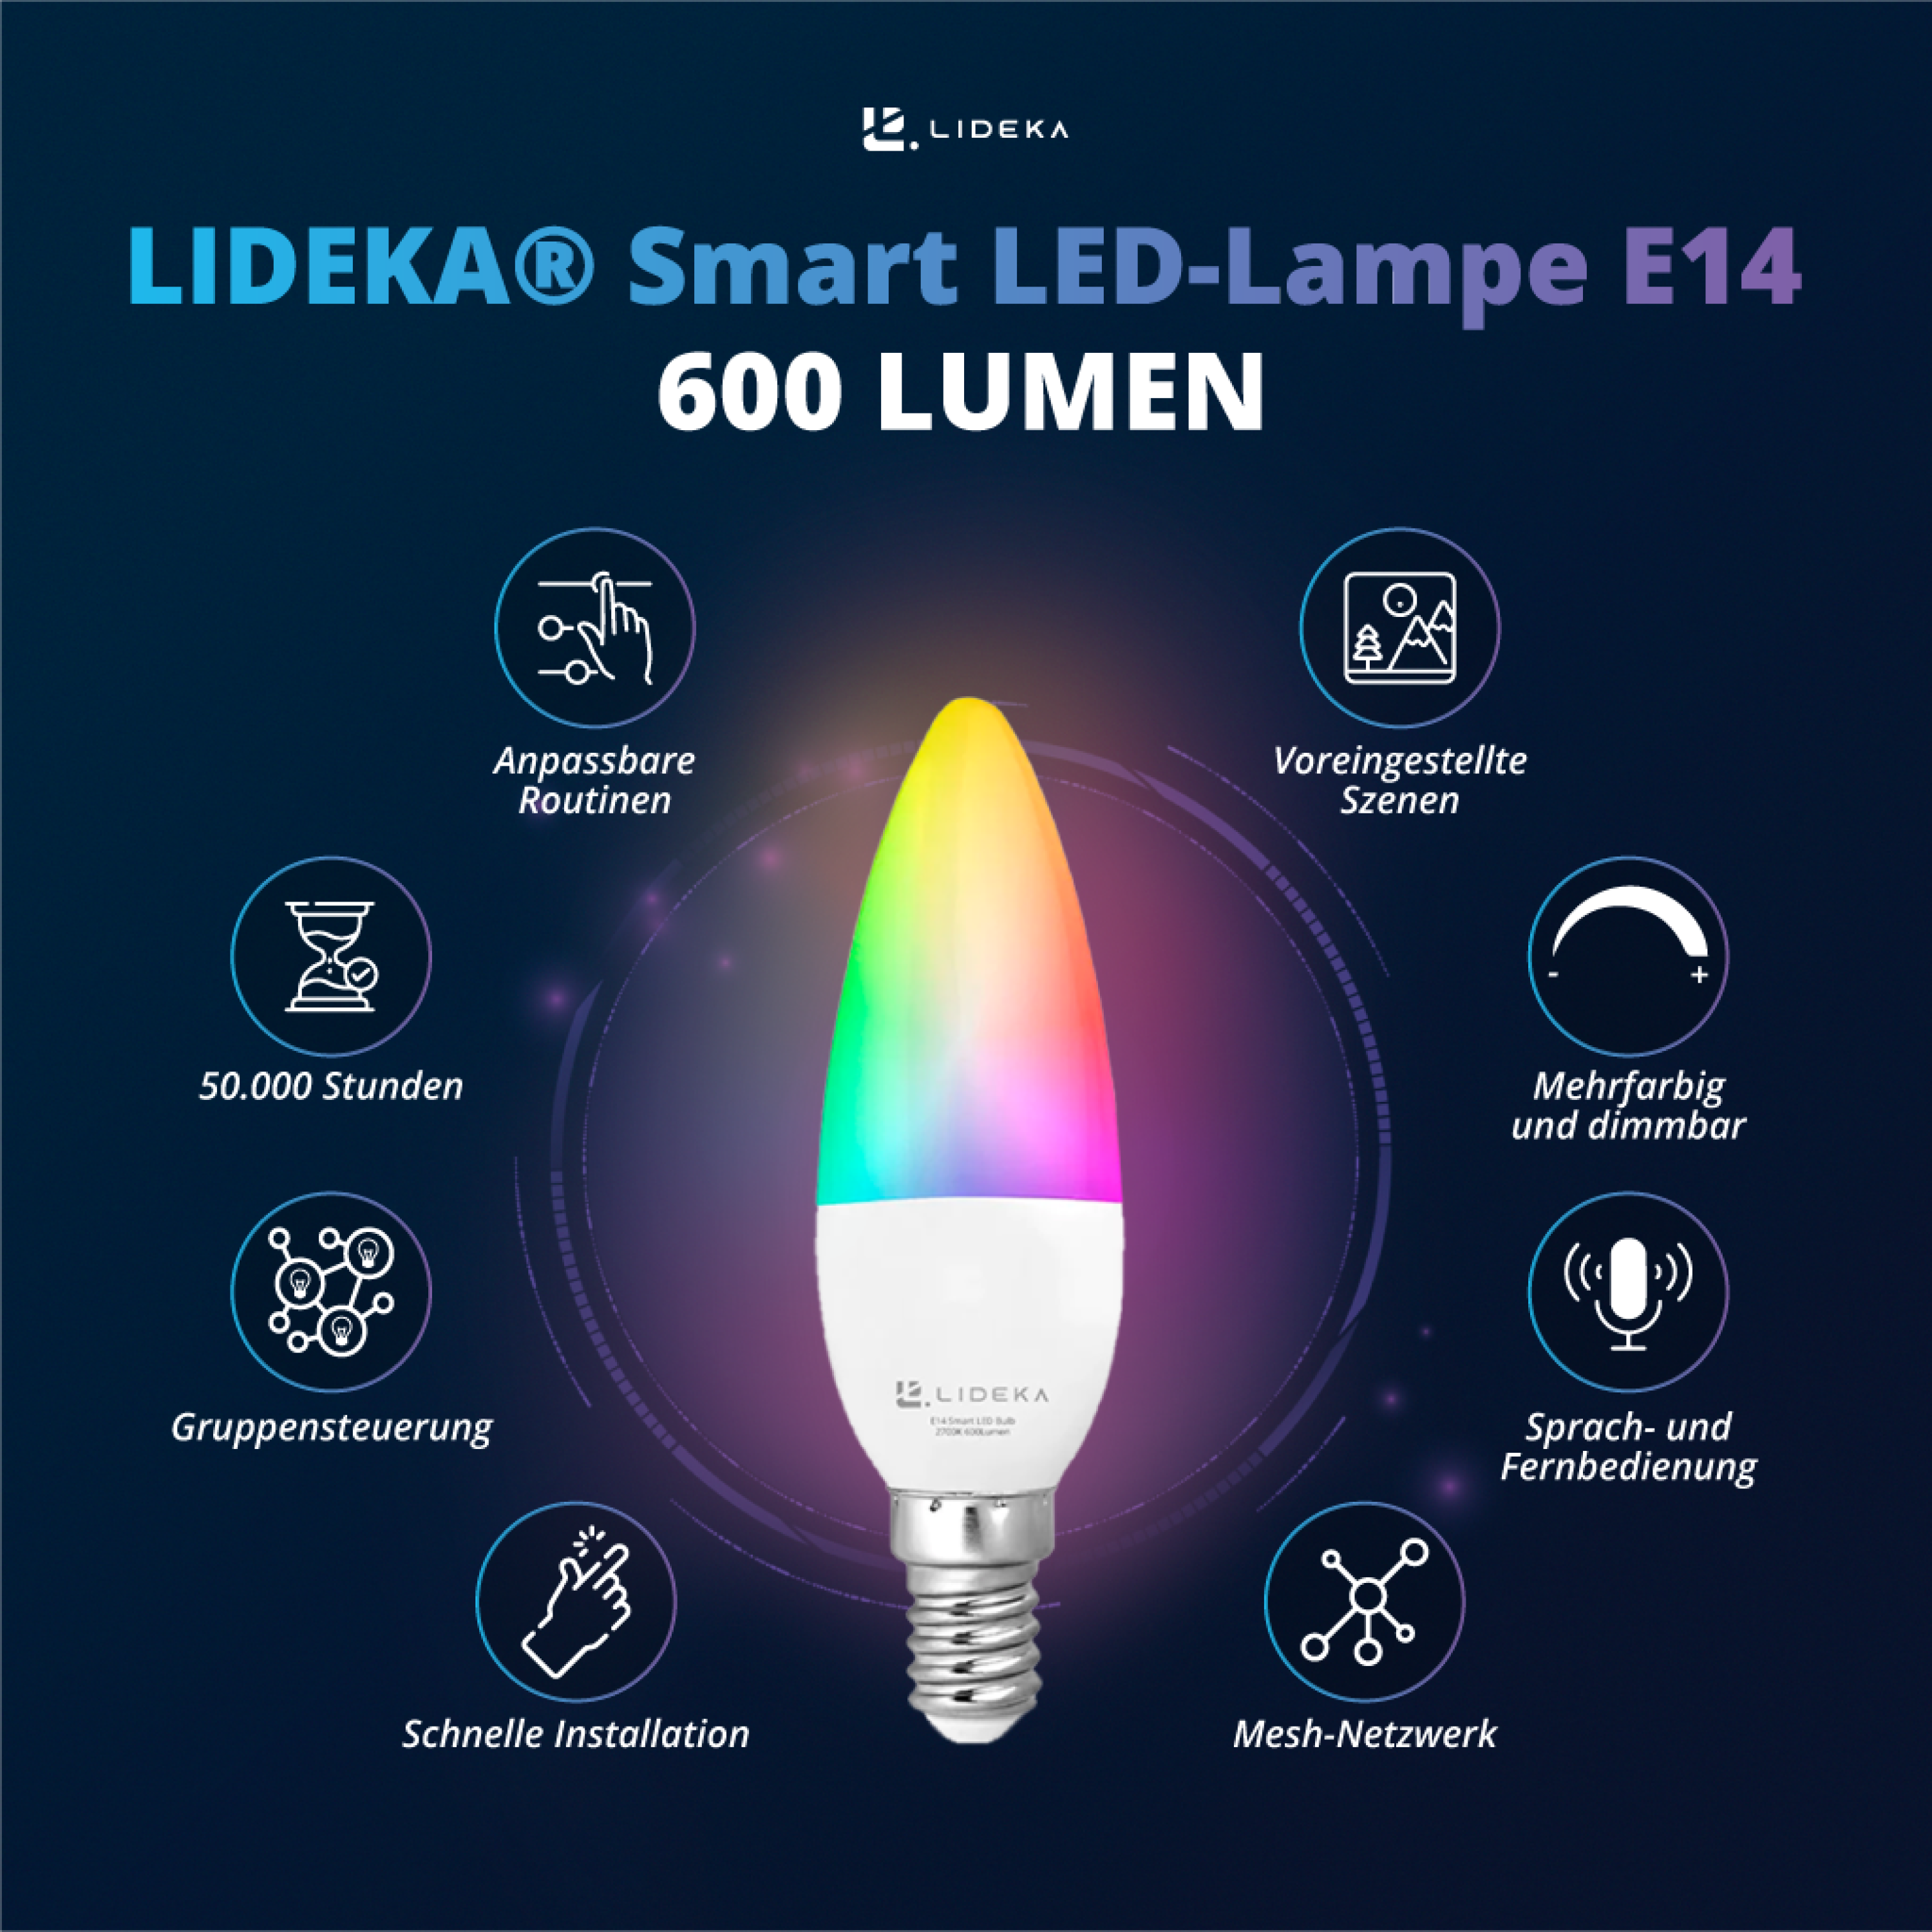 LIDEKA E14 LED Lampen LED-Leuchtmittel Multicolors E14 6er-Pack Dimmbar 6W 600Lm Watt 6